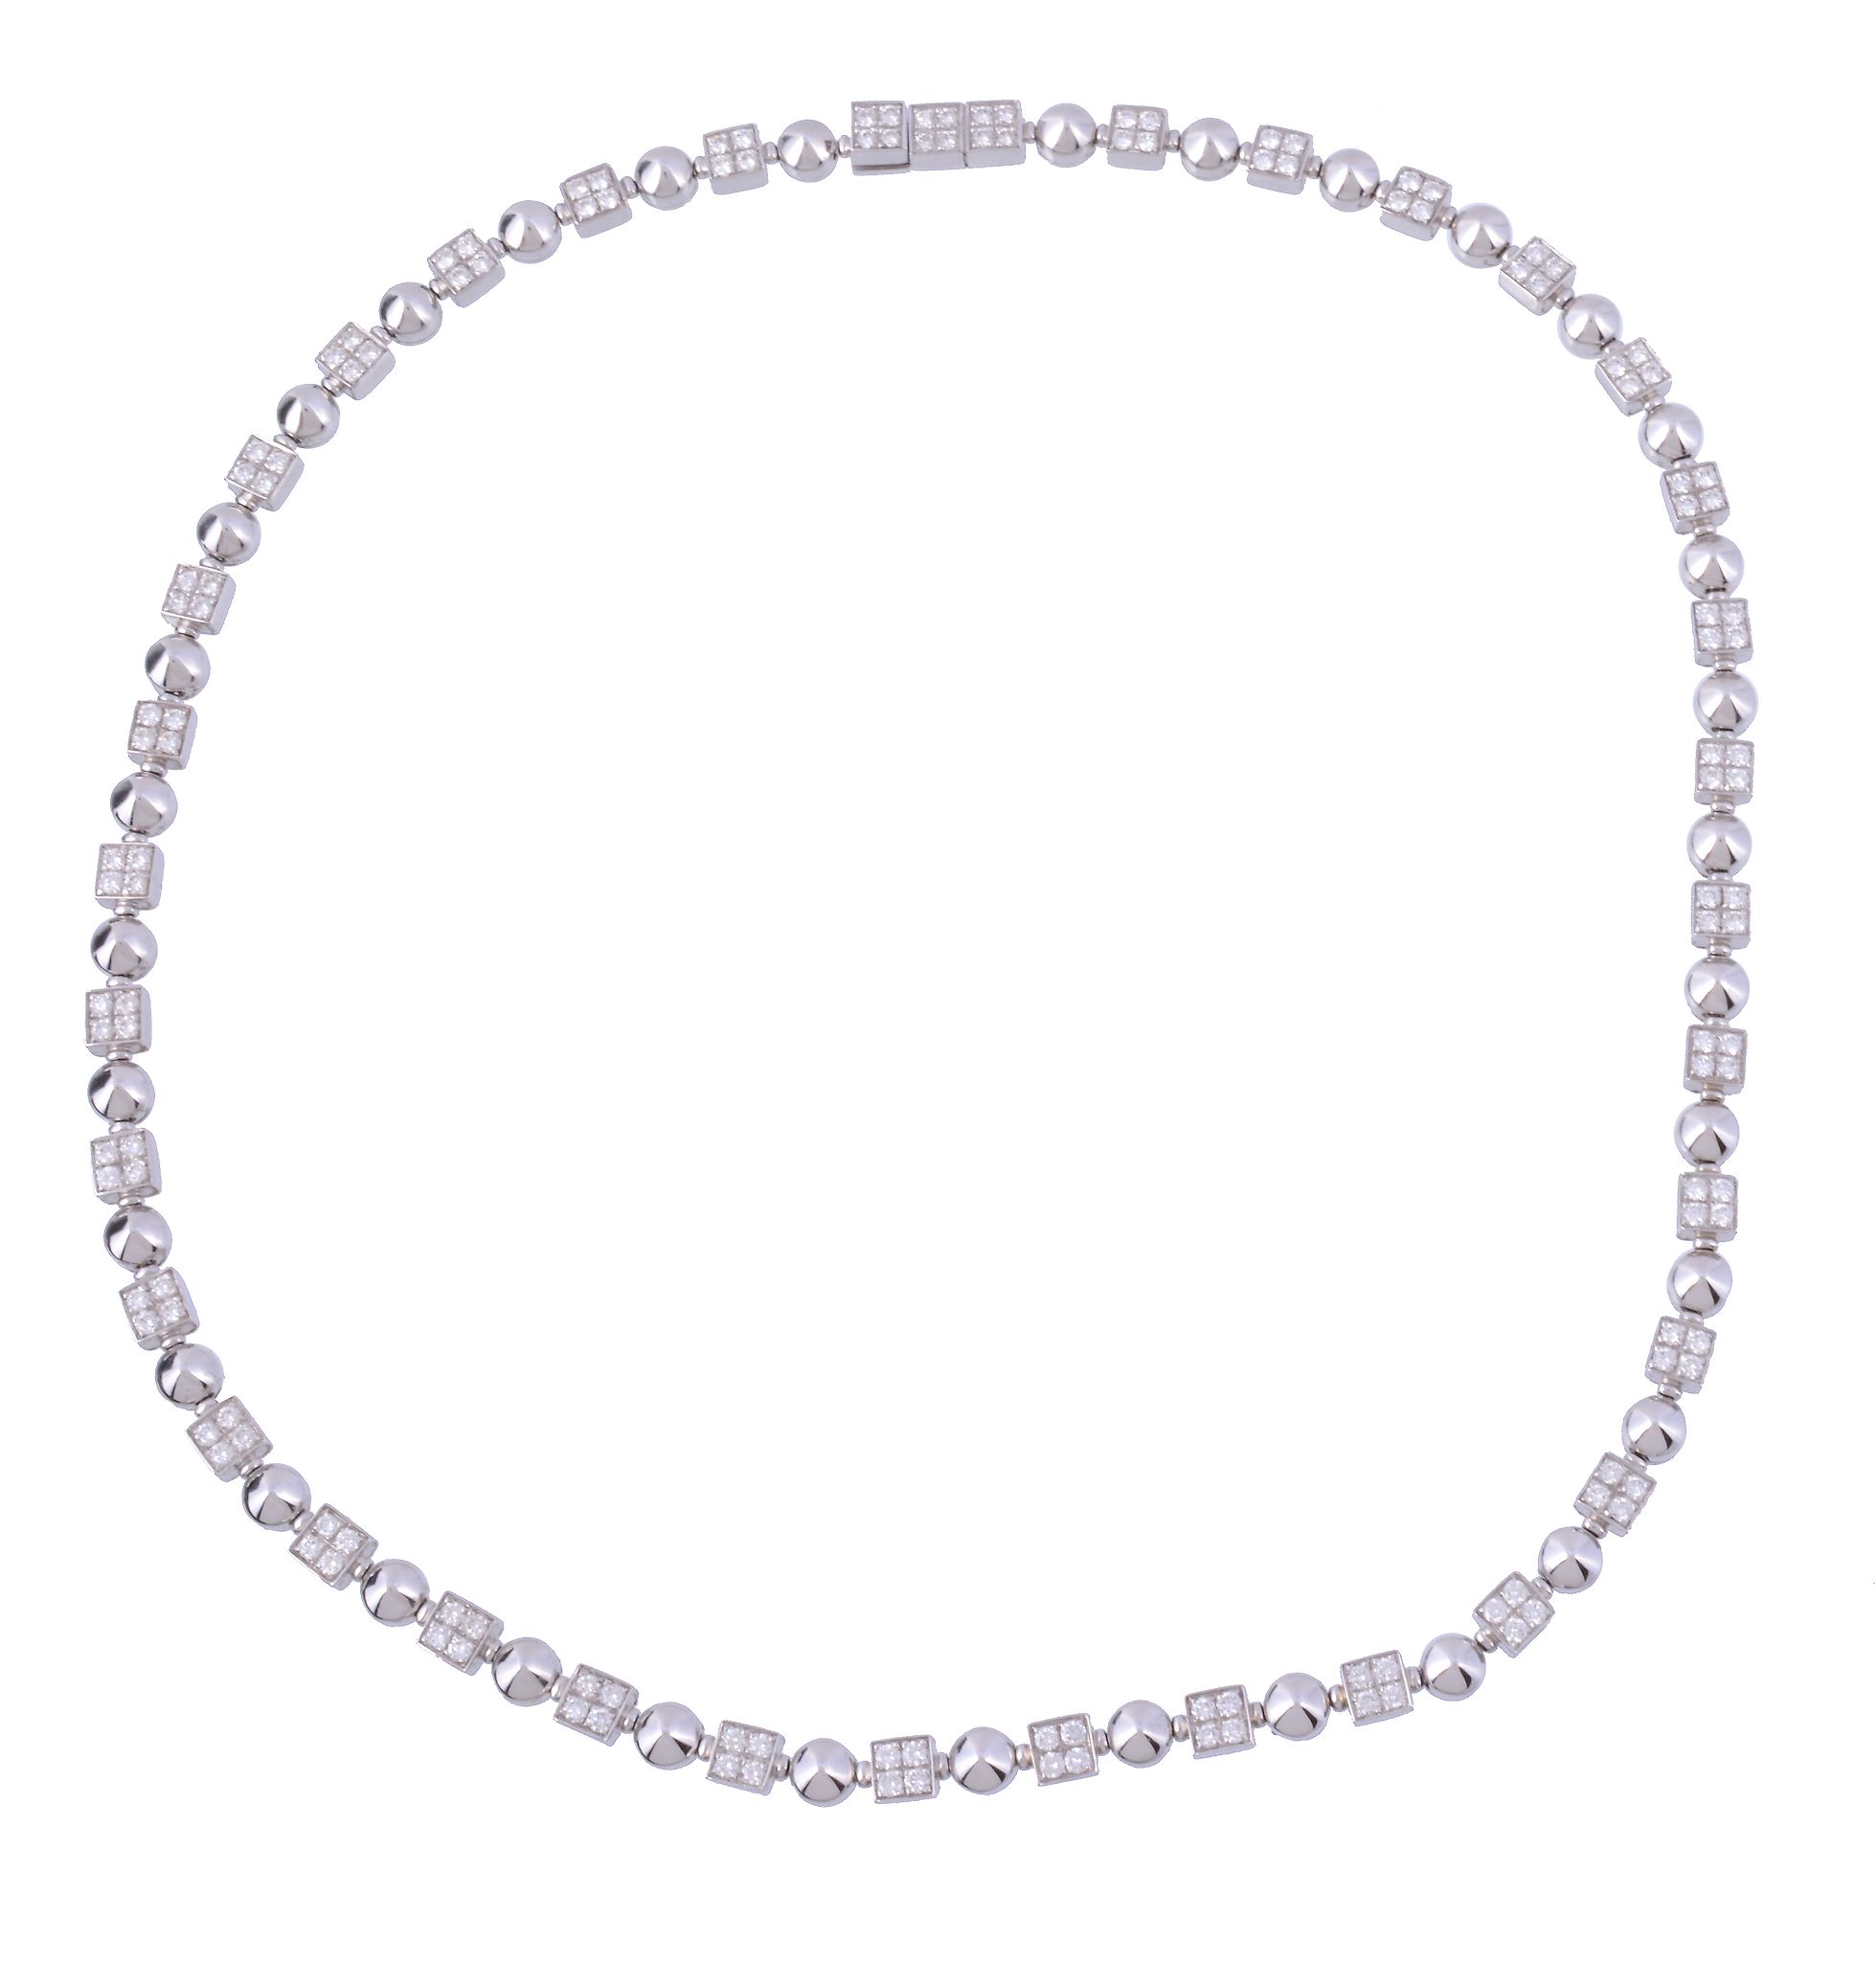 A Lucea diamond collar necklace by Bulgari  A Lucea diamond collar necklace by Bulgari  , the - Image 2 of 2